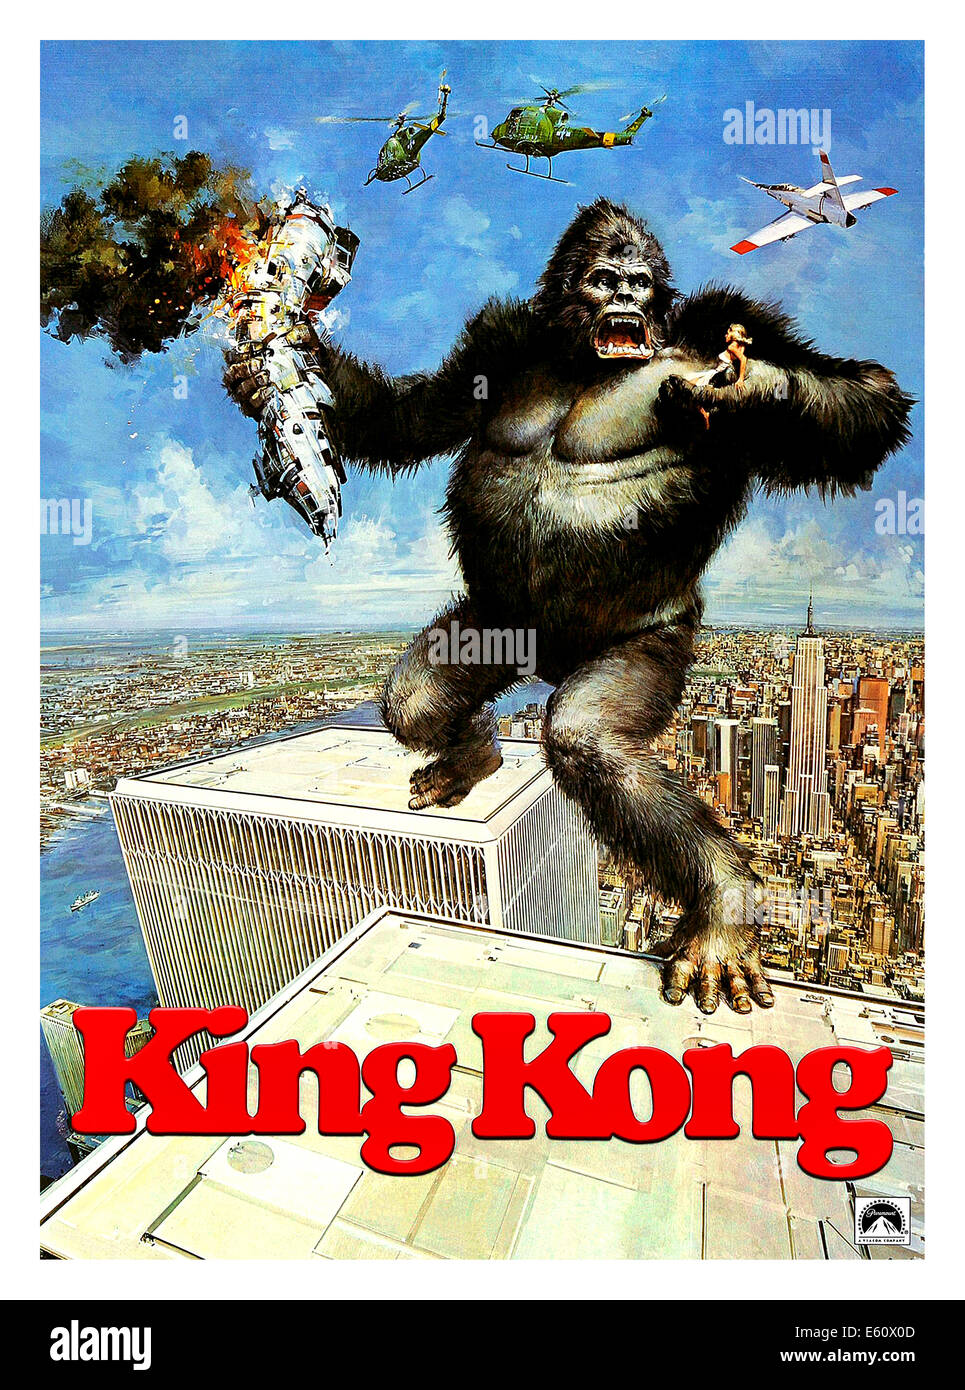 King Kong movie poster Stock Photo